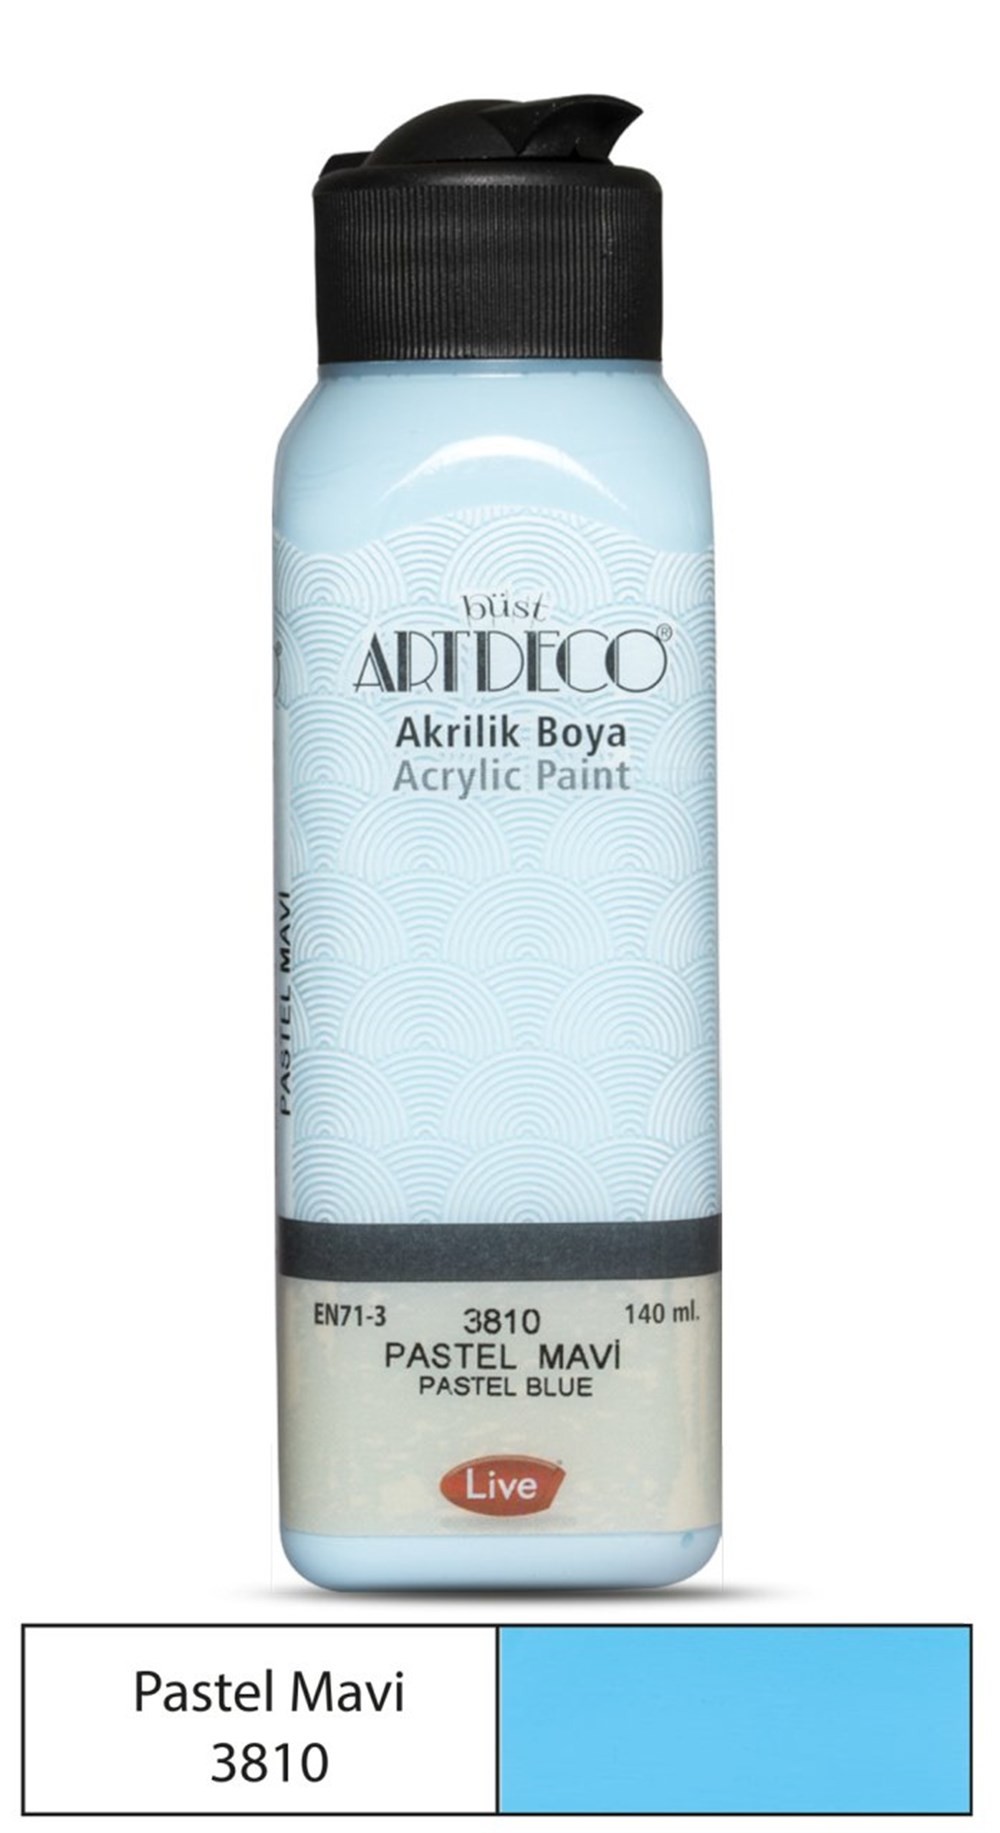 Artdeco Akrilik Boya 140 ml 3810 Pastel Mavi